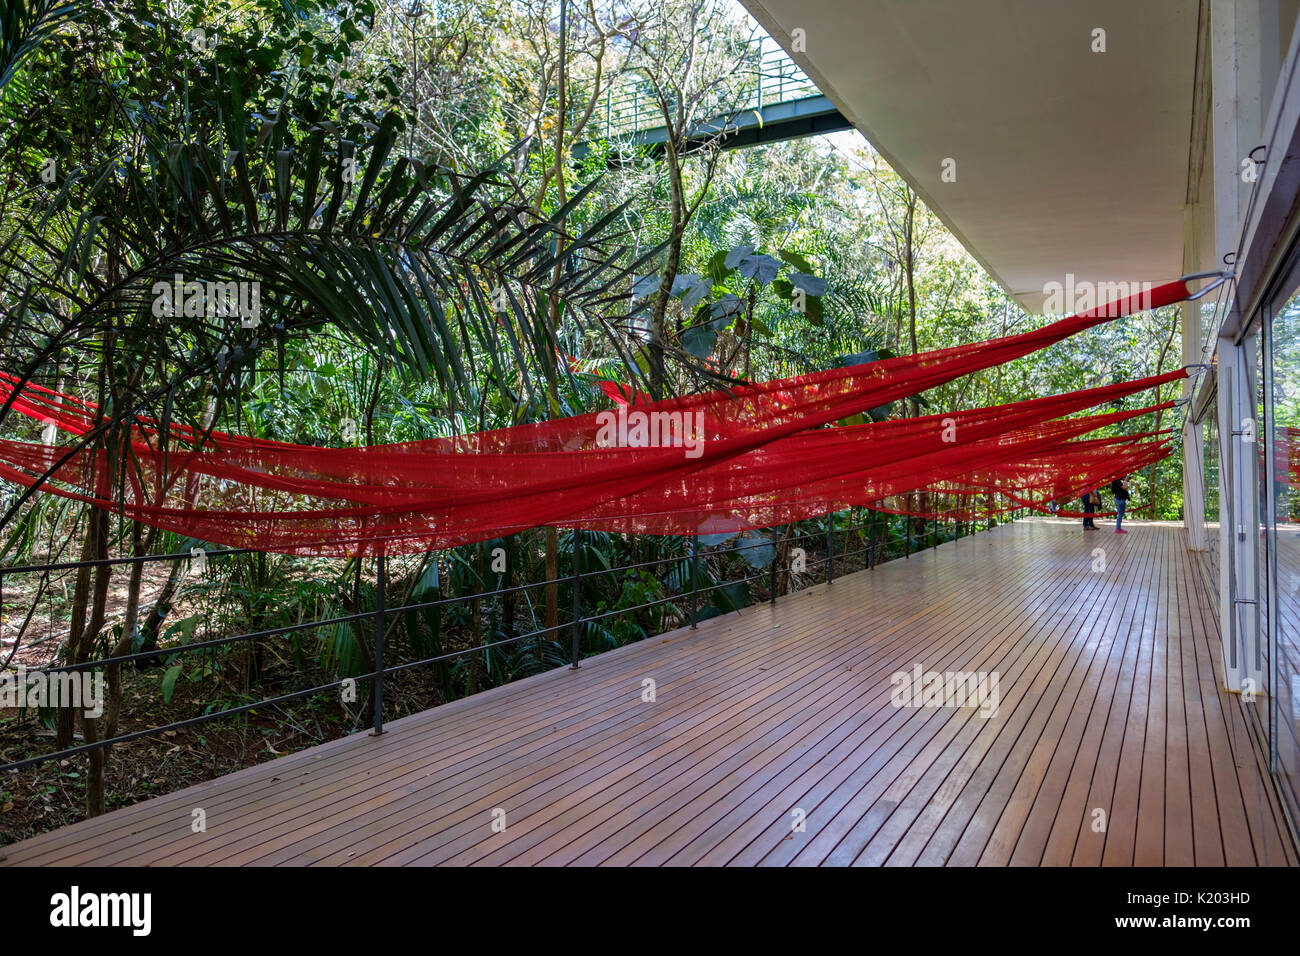 Amache rosso arte di installazione, Tunga Gallery, Inhotim Istituto Culturale, Brumadinho, Belo Horizonte, Minas Gerais, Brasile. Foto Stock